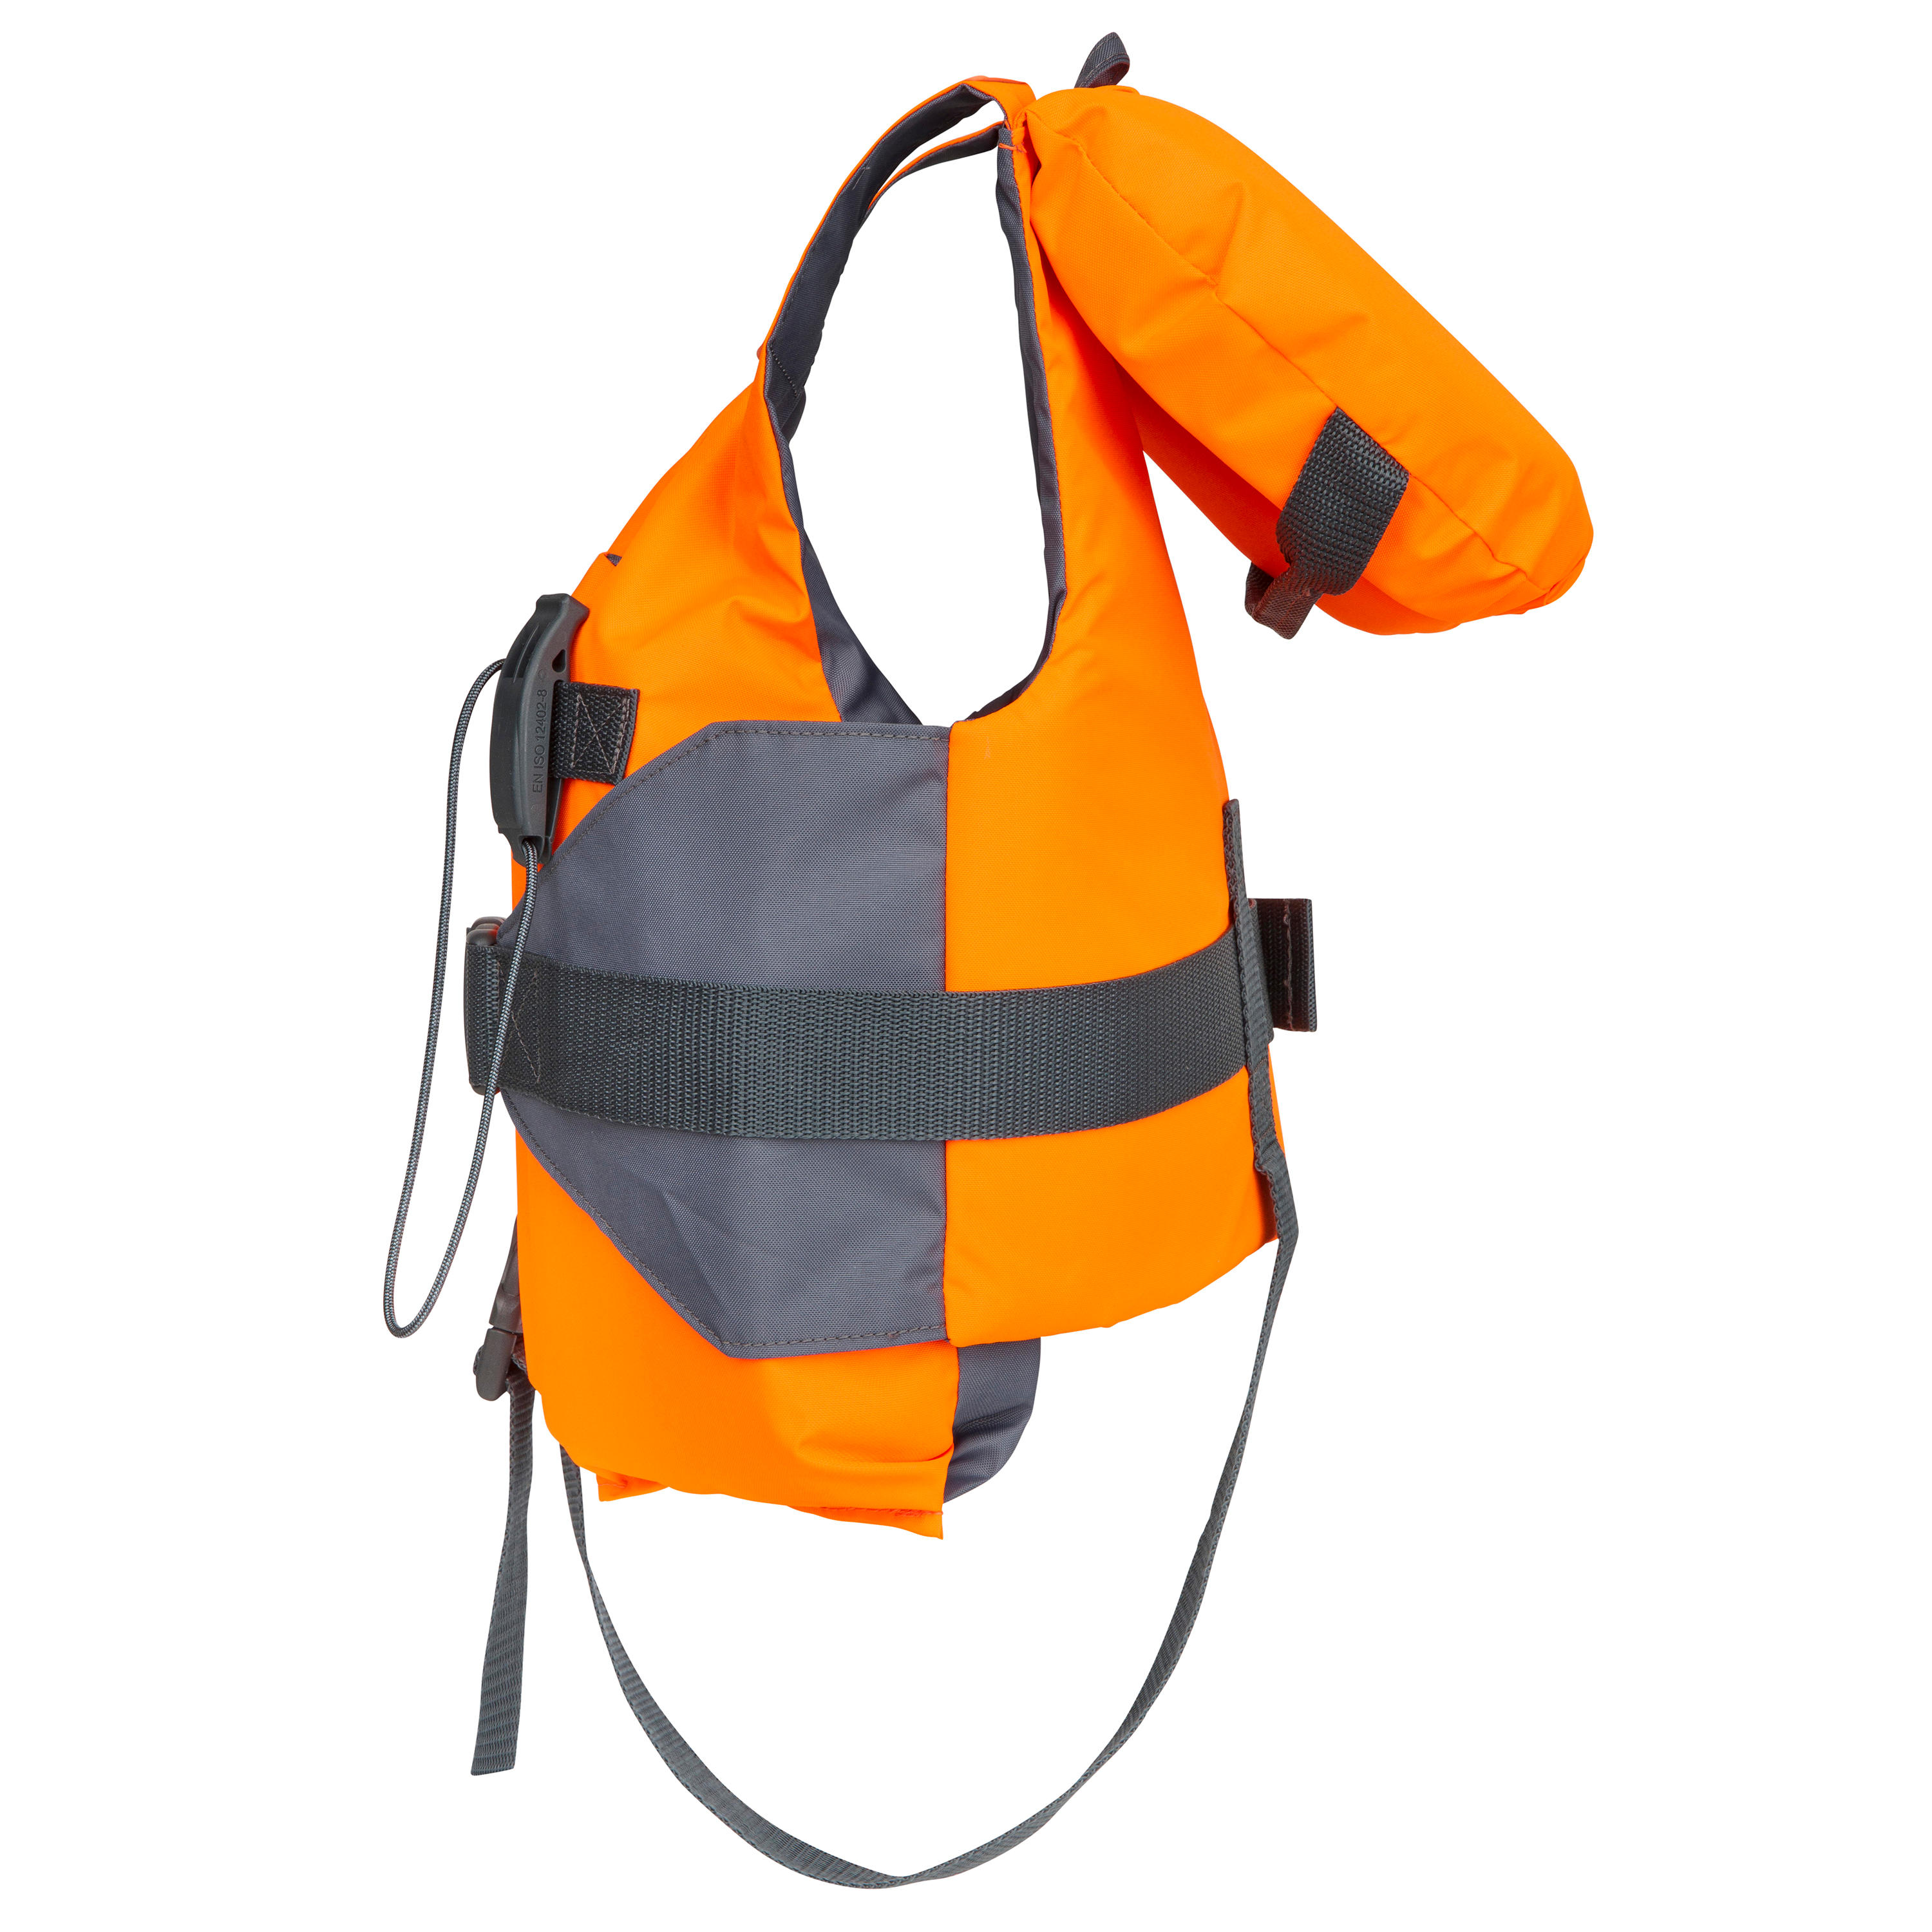 Kids' life jacket LJ100N Easy JR 15-40 kg - orange/grey 4/9